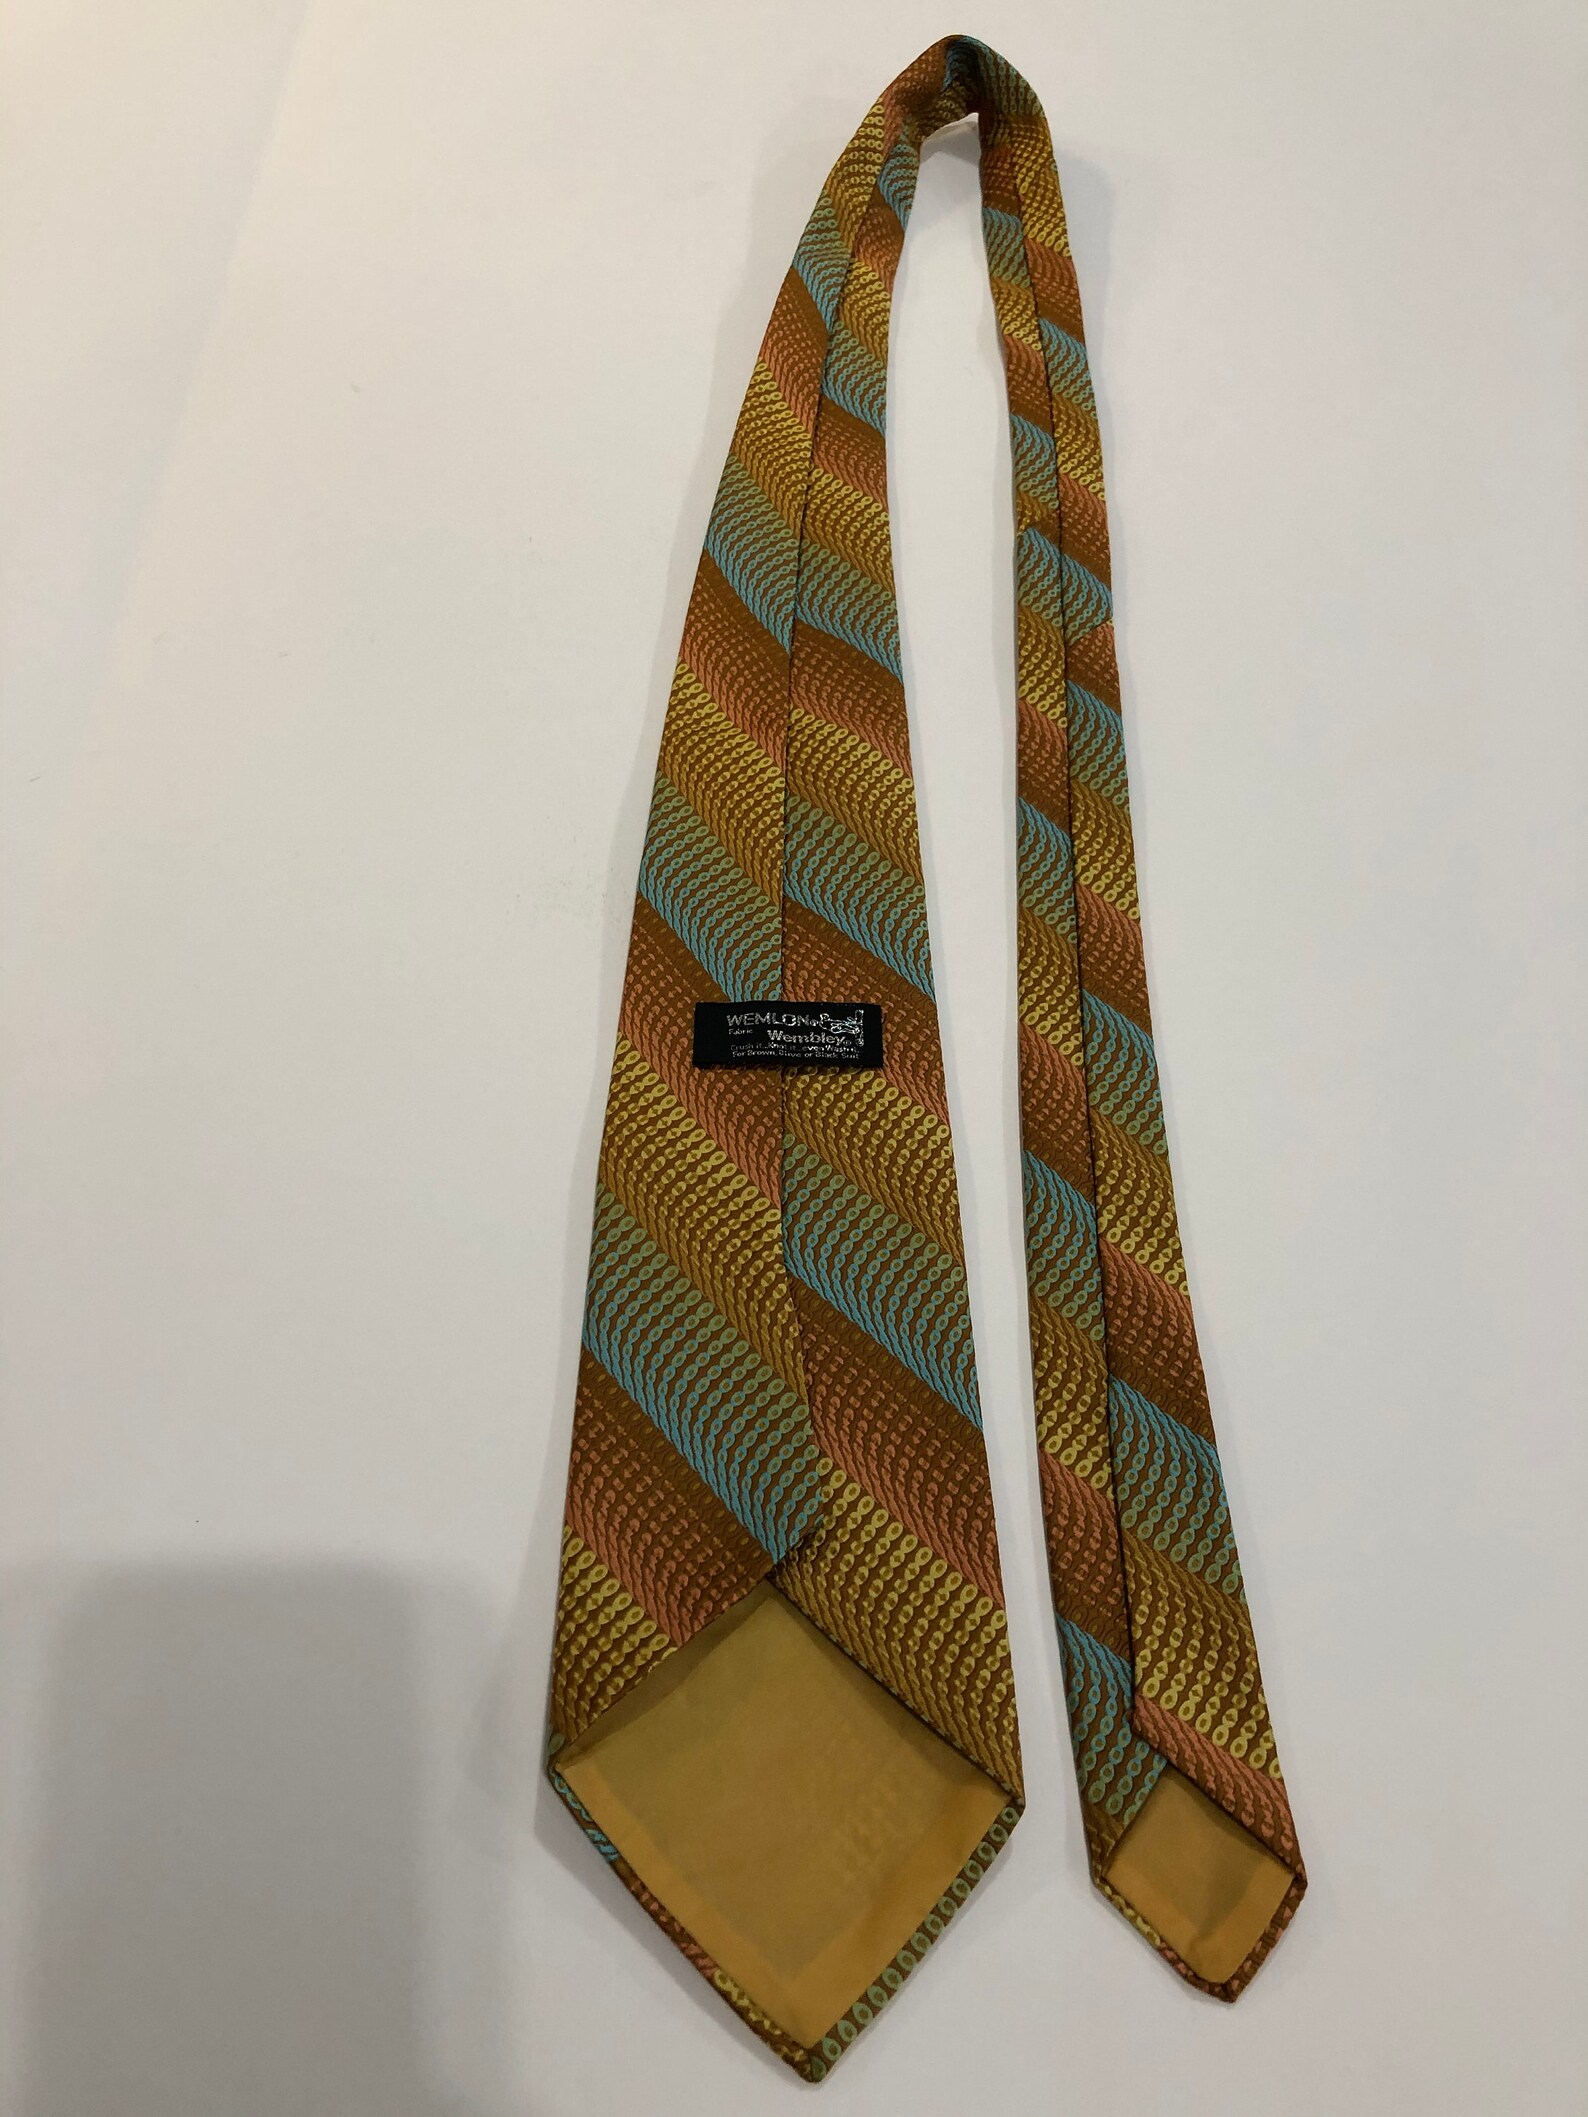 Antique Tie Wembley Neckite Cravat USA Made 1970s 23 | Etsy